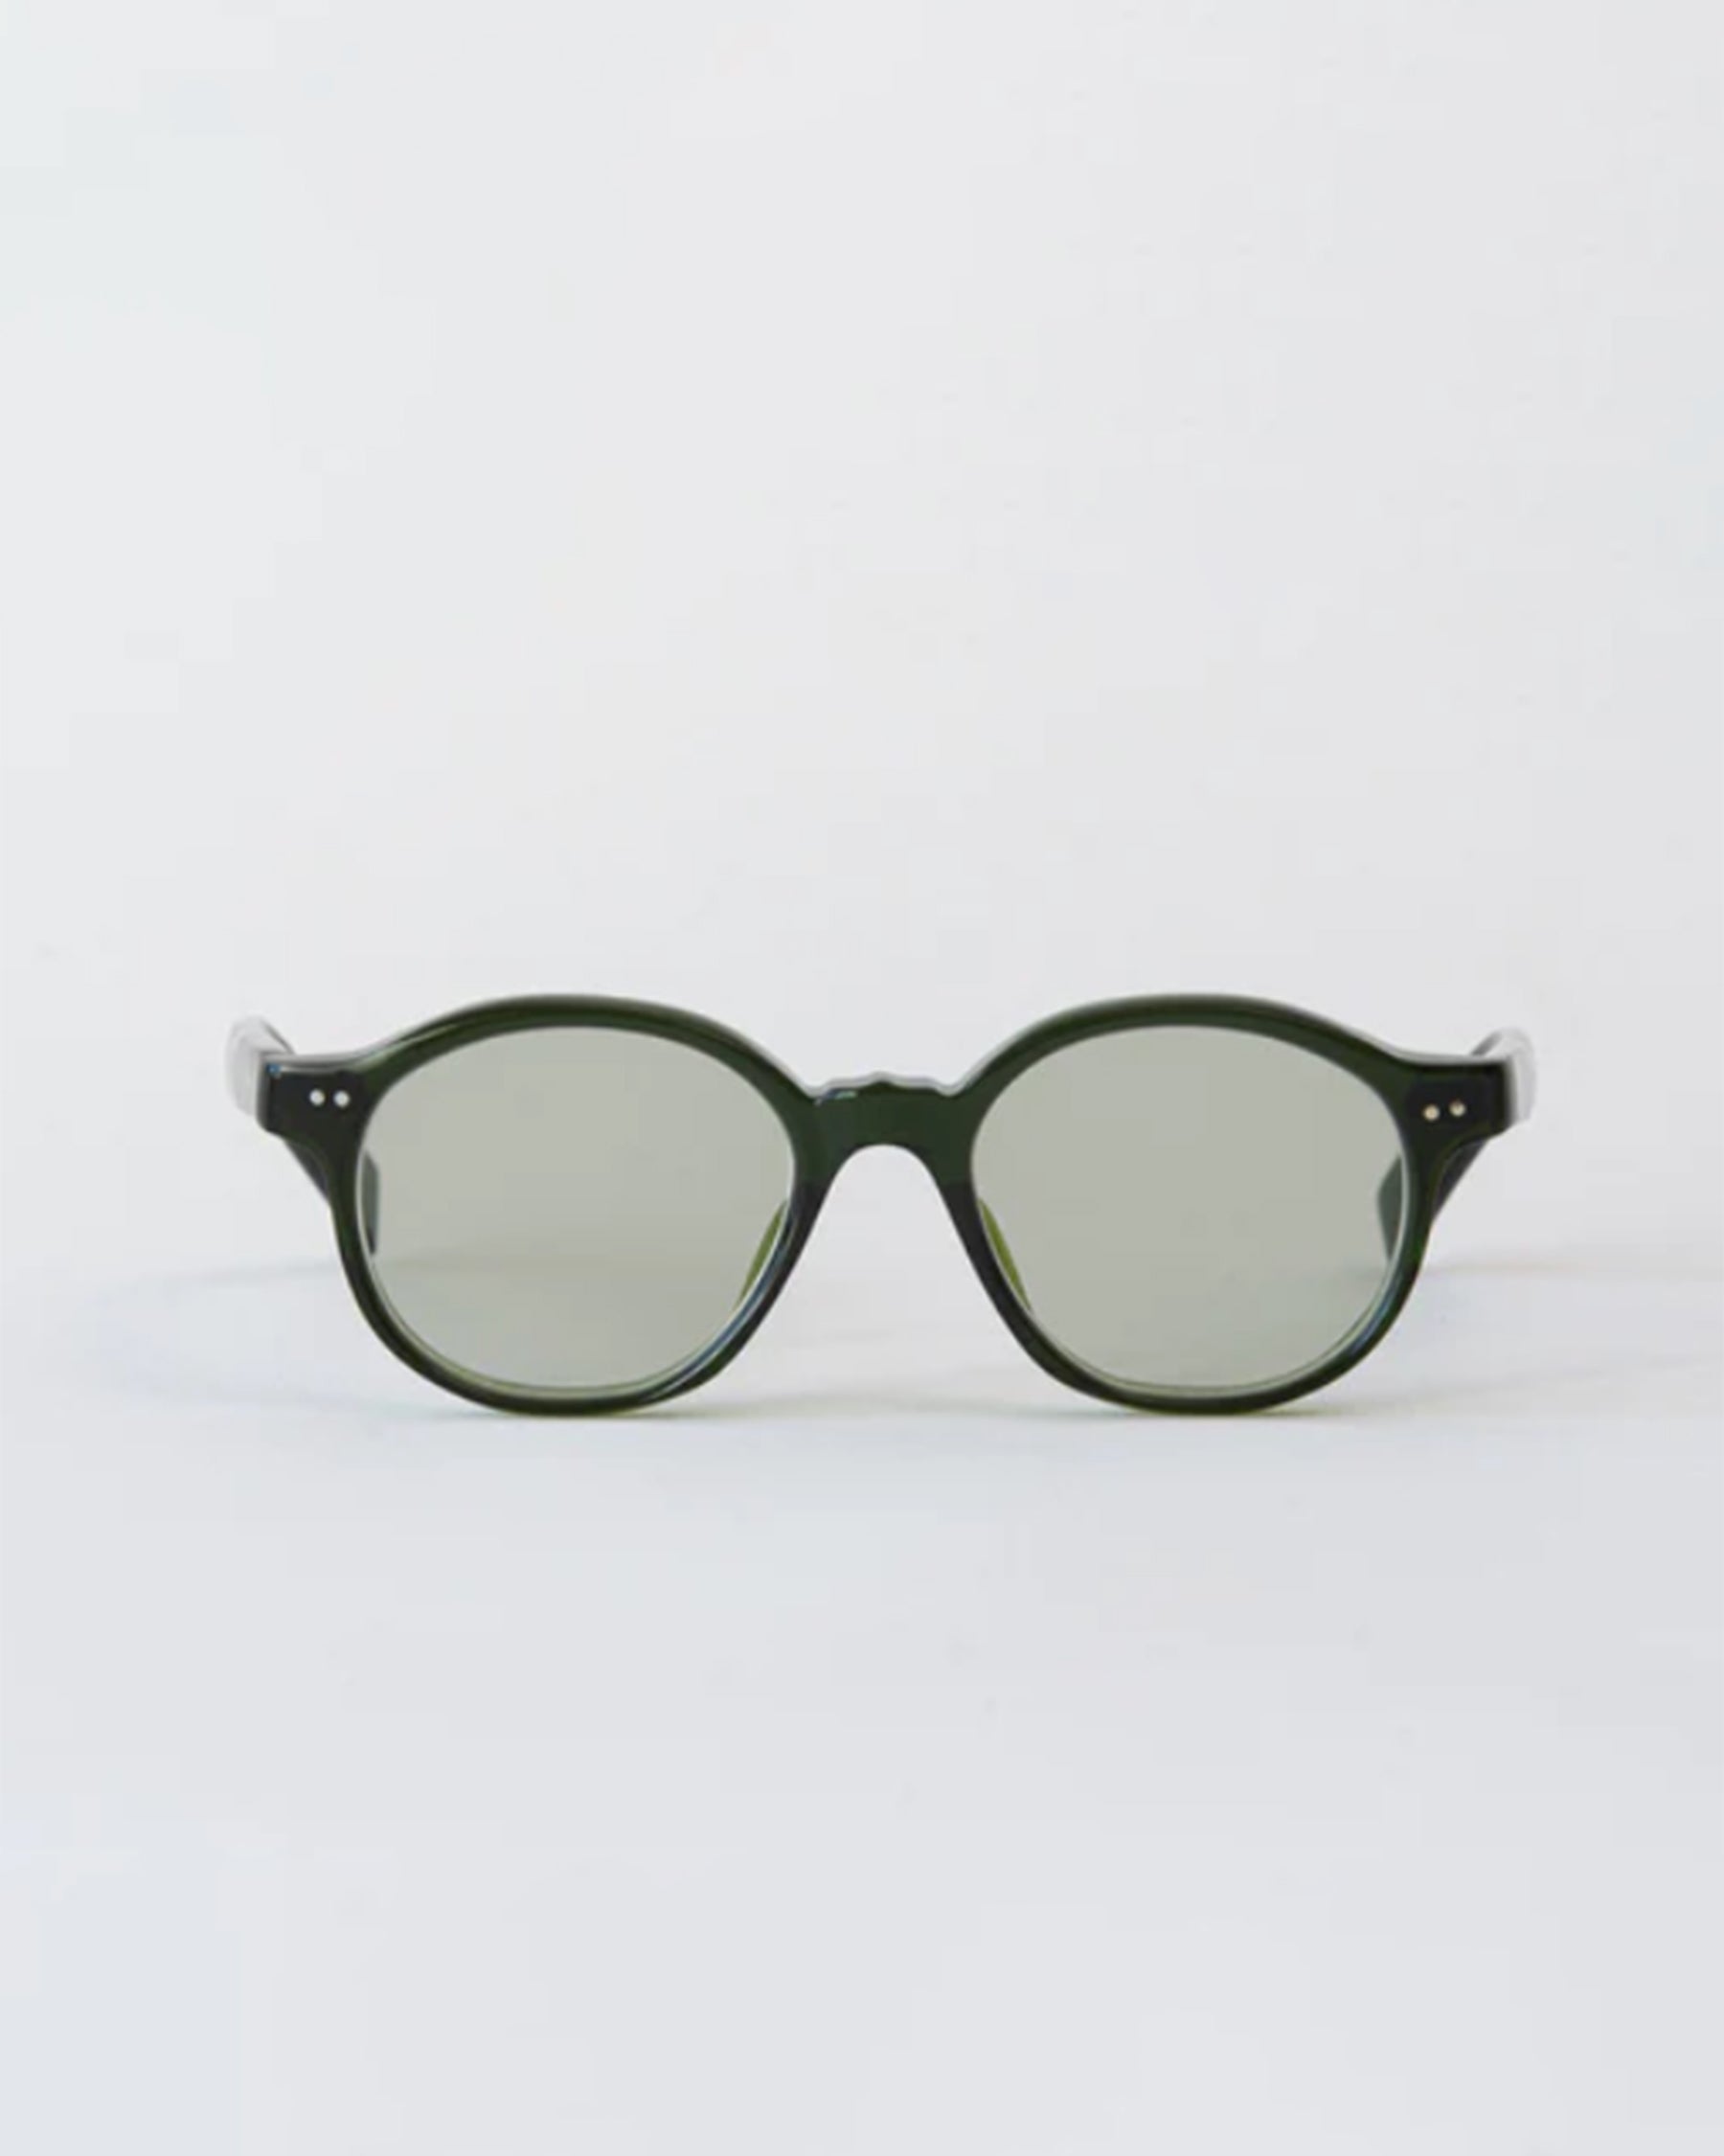 gp-10 Sunglasses vert/ Lens: Green